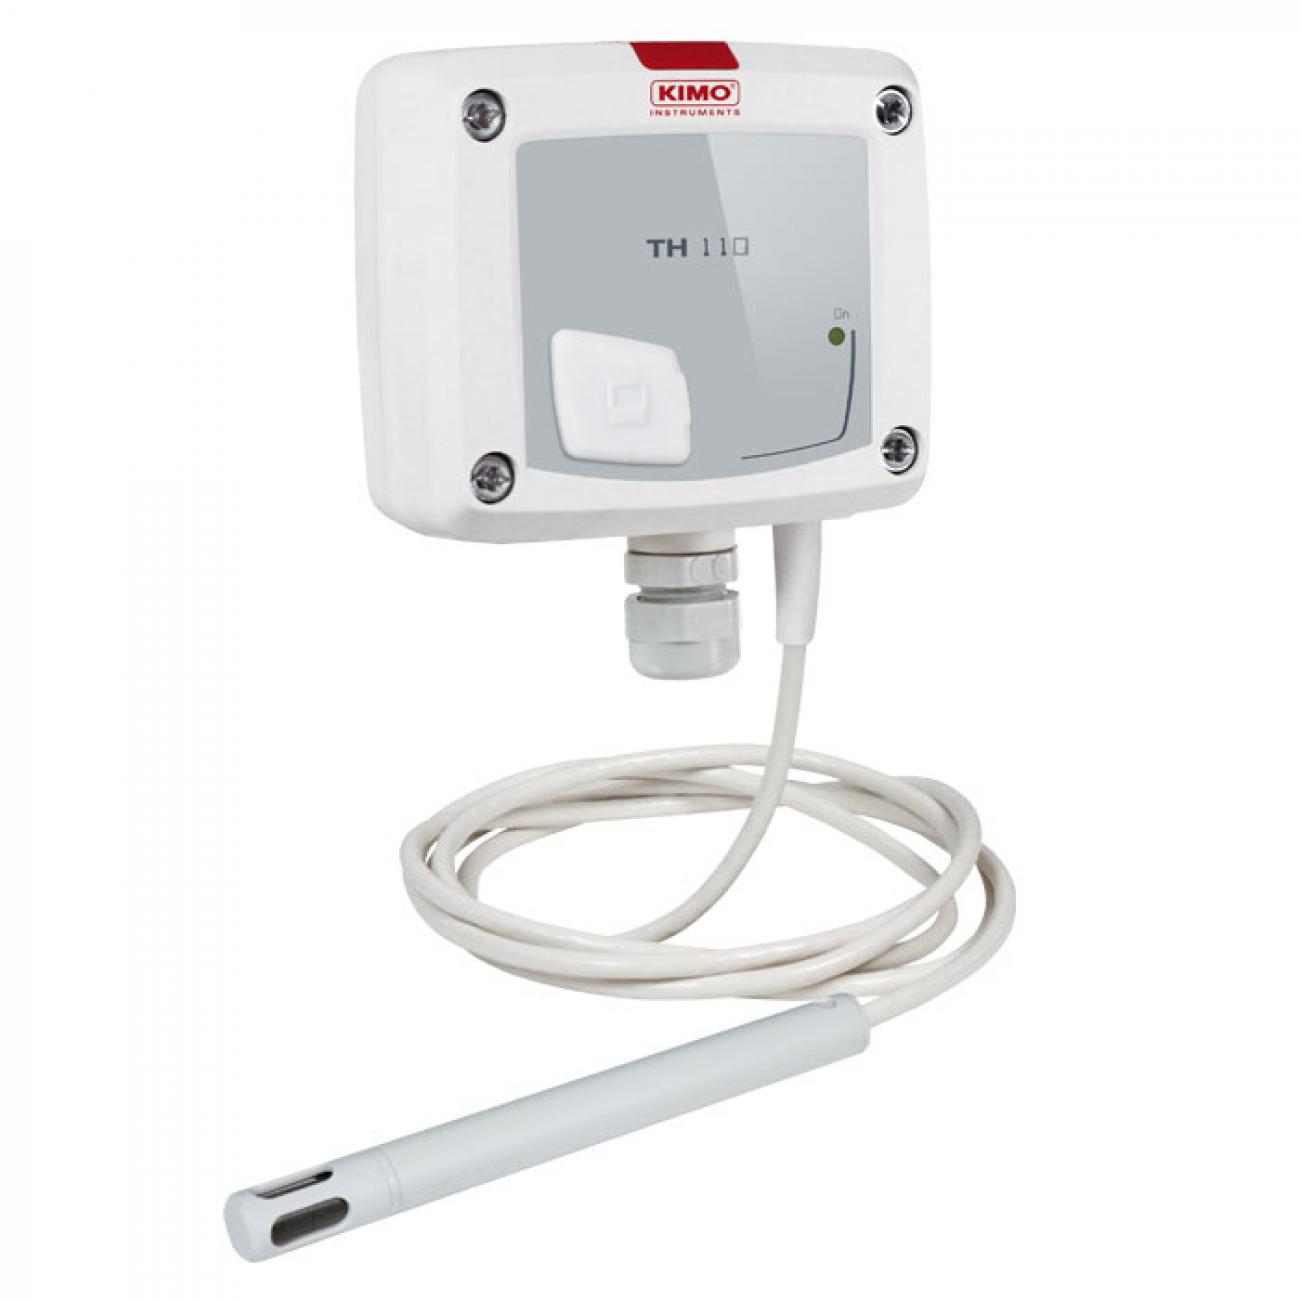 TH 110 Humidity and temperature sensor